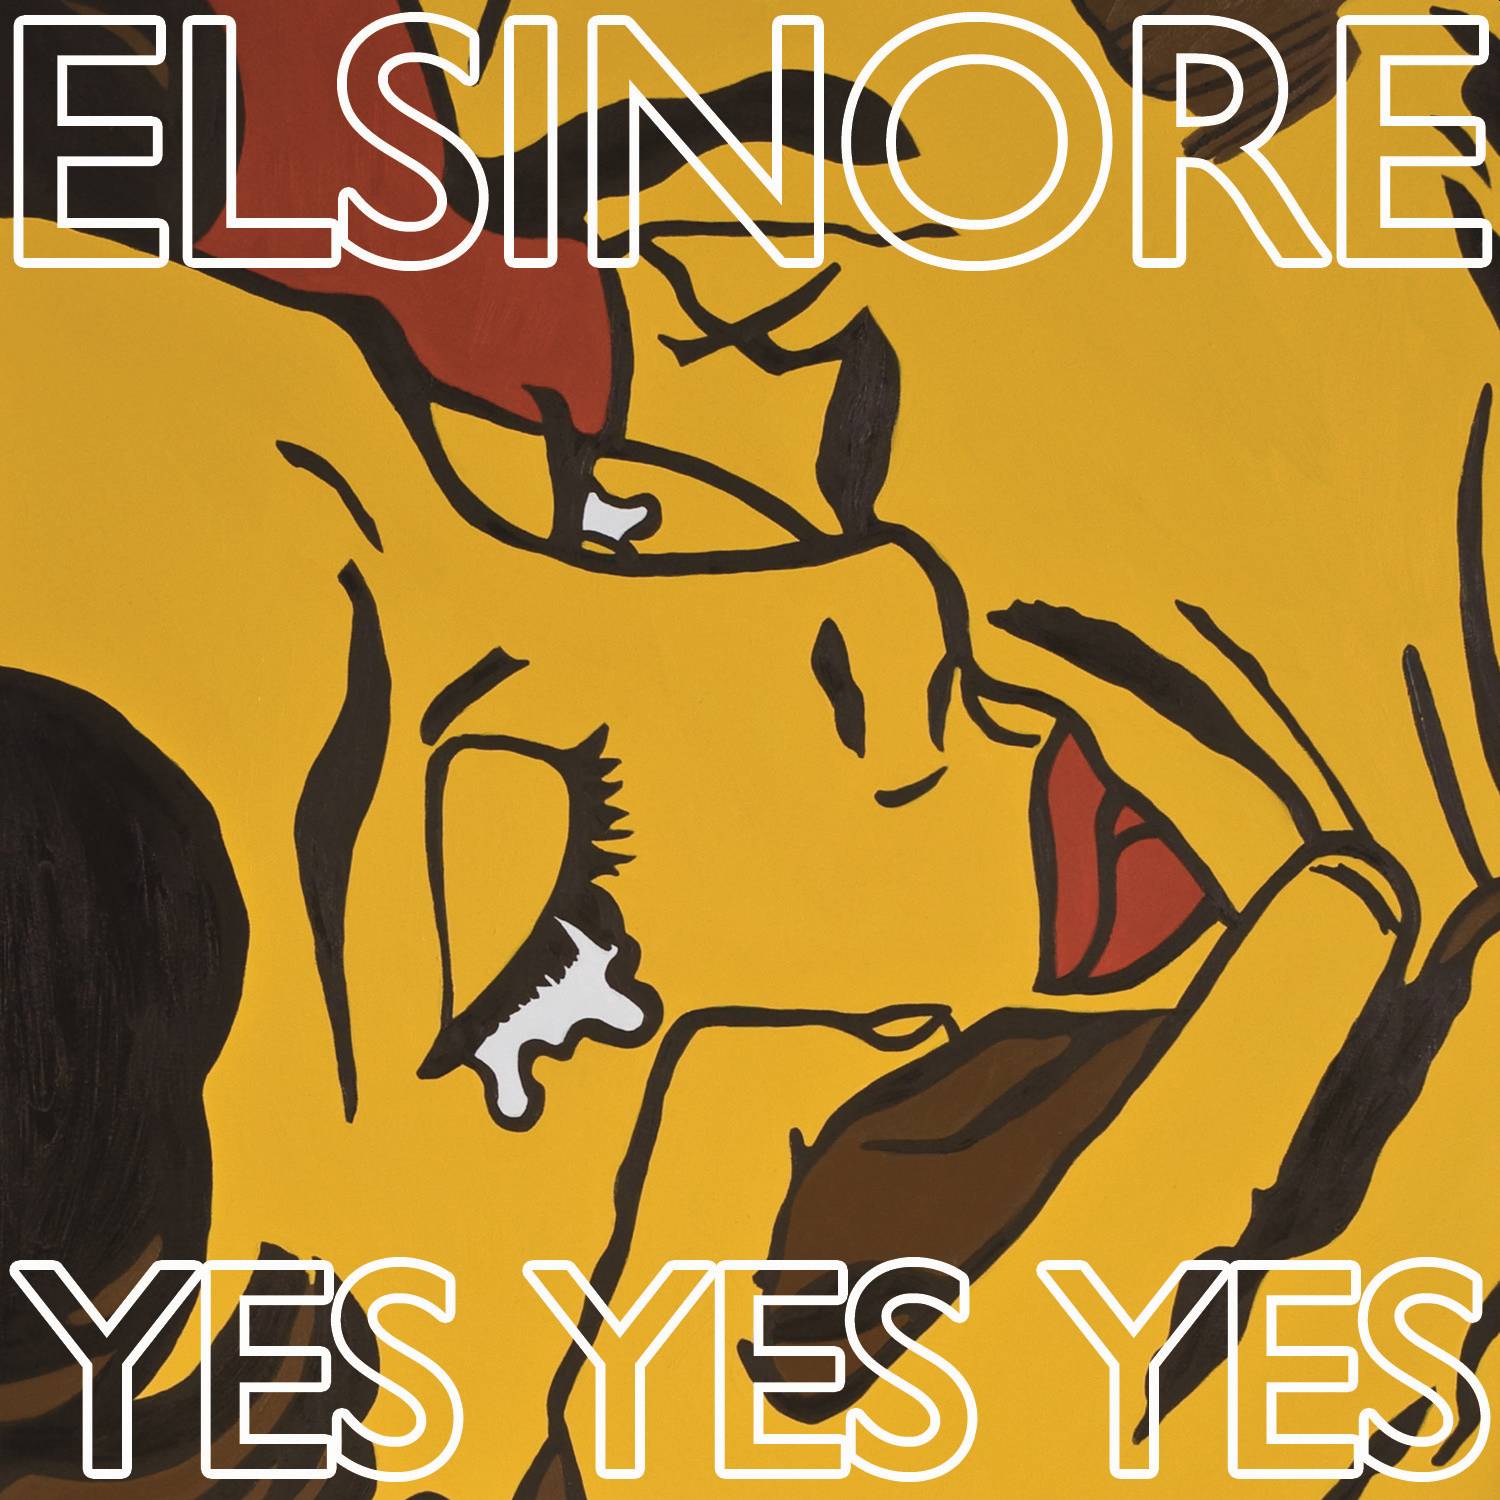 Elsinore gets the go-ahead from Lichtenstein’s estate